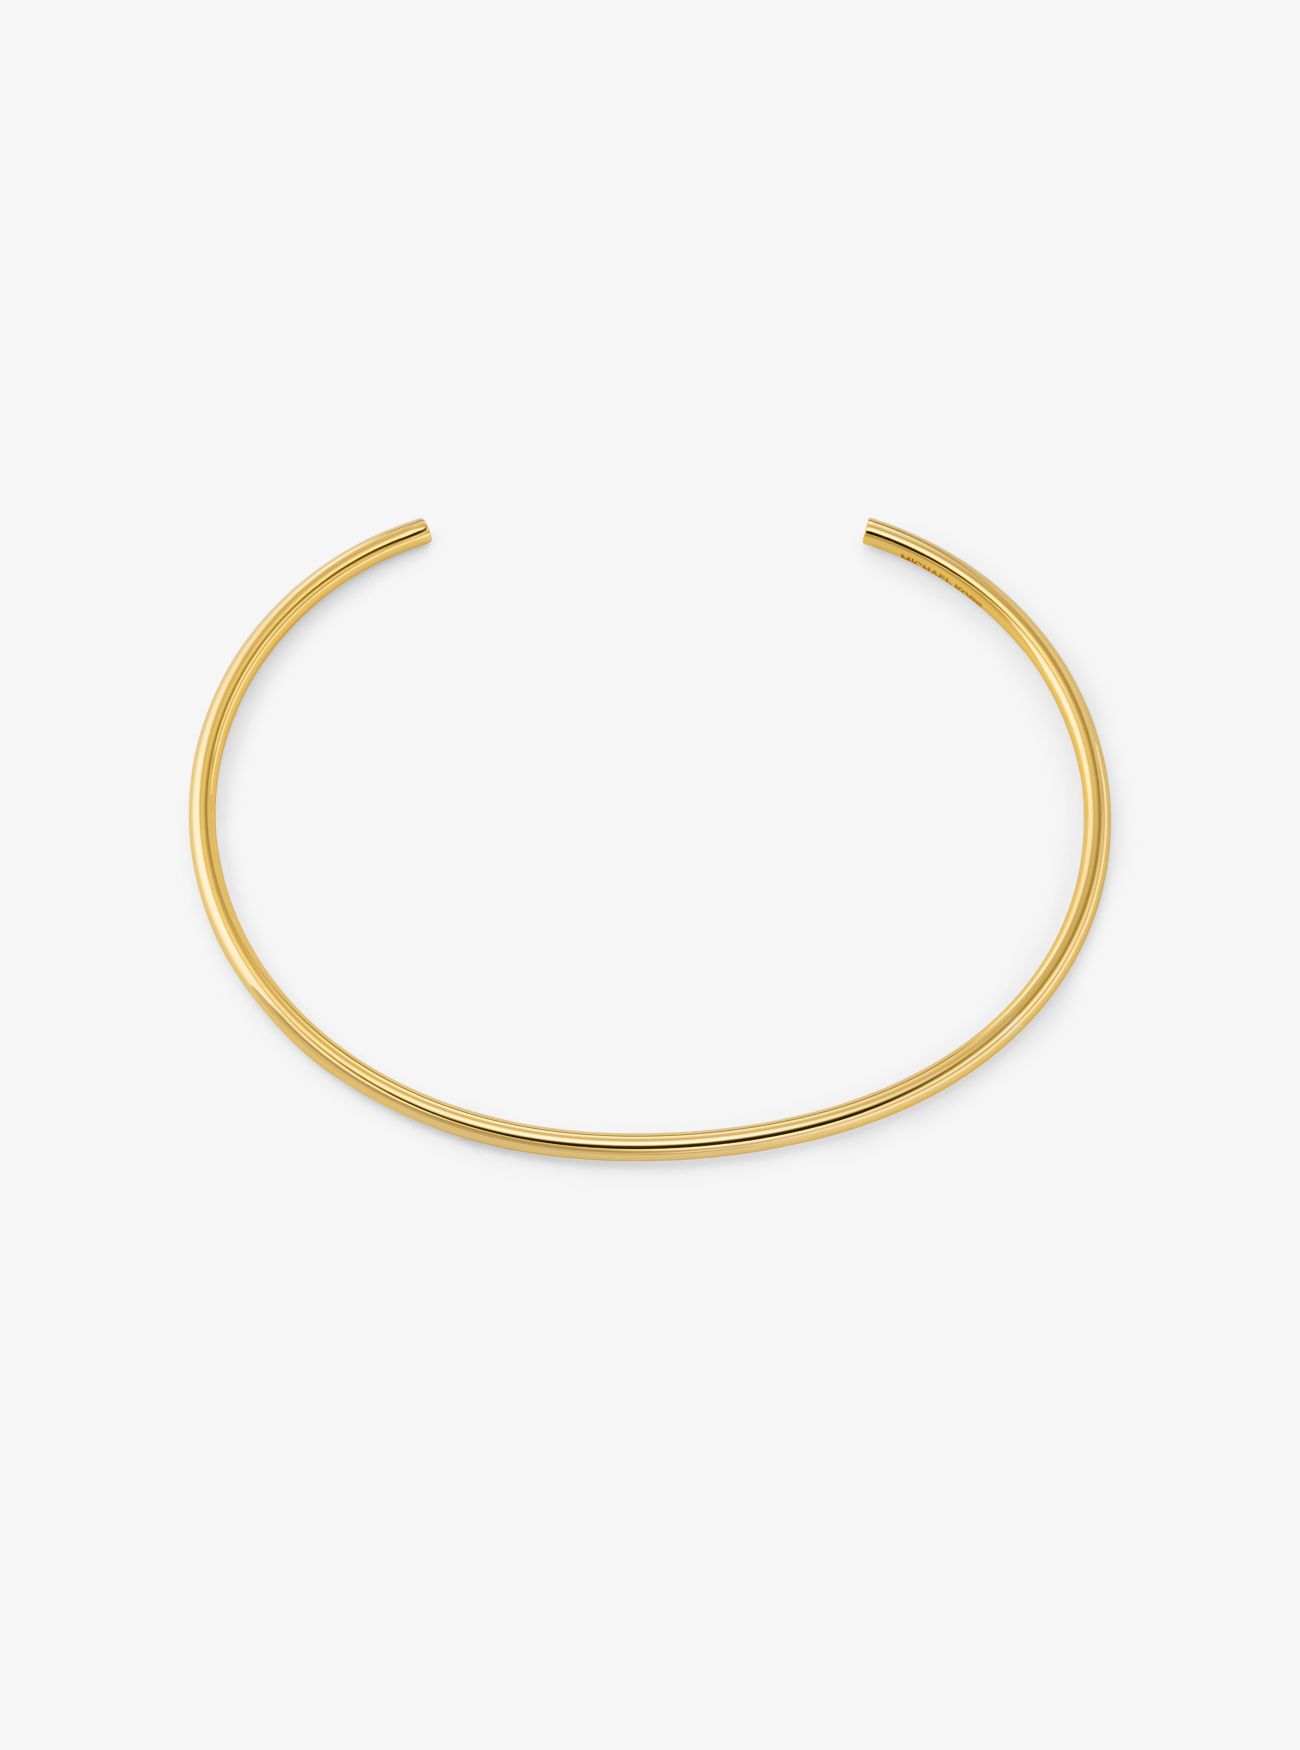 MK Precious Metal-Plated Brass Collar Necklace - Gold - Michael Kors